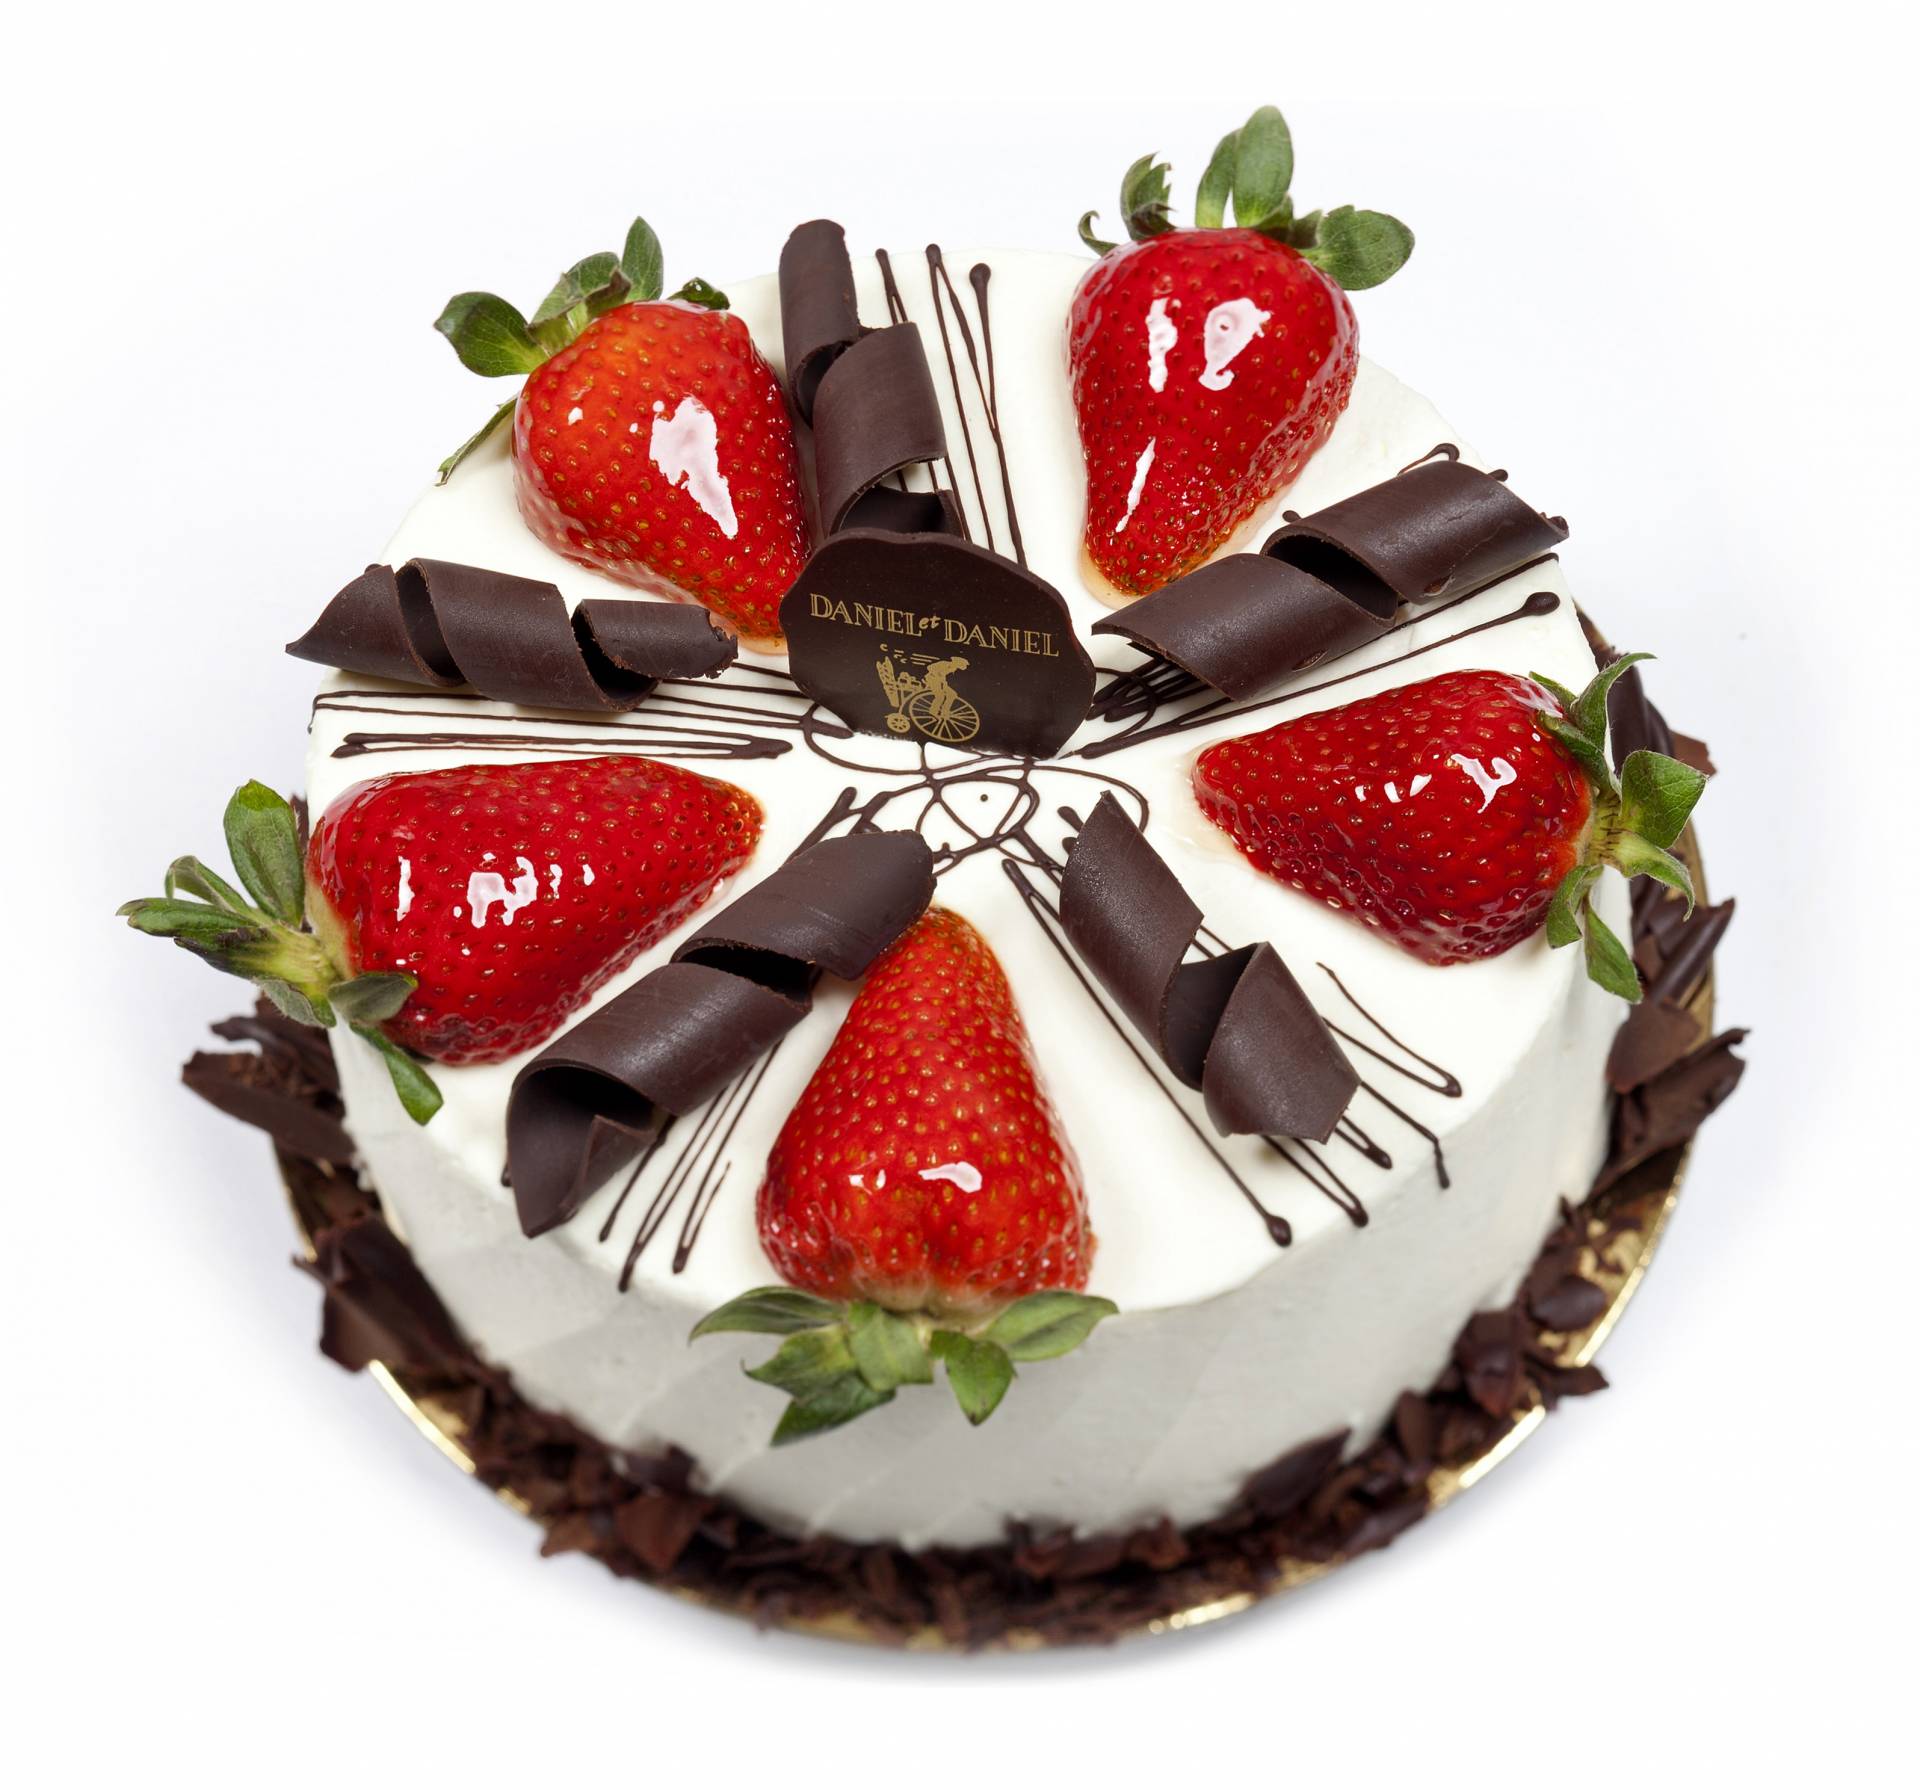 strawberry shortcake with fresh strawberries and chocolate swirls on top